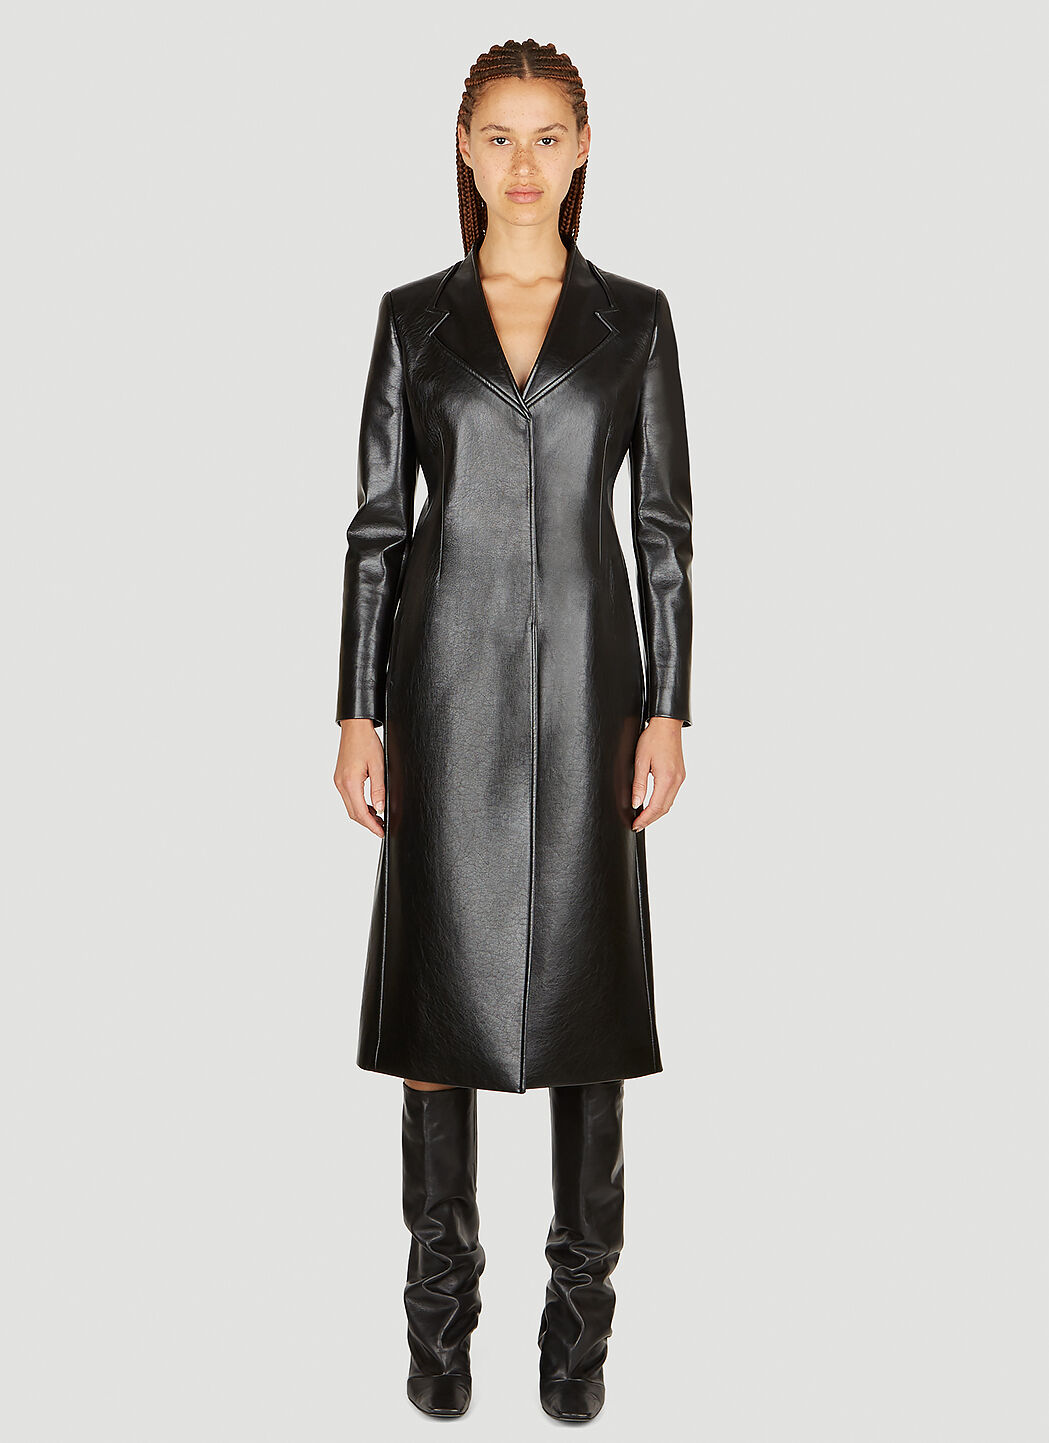 Coperni Trompe-Loeil Tailored Faxu Leather Coat Black cpn0251010